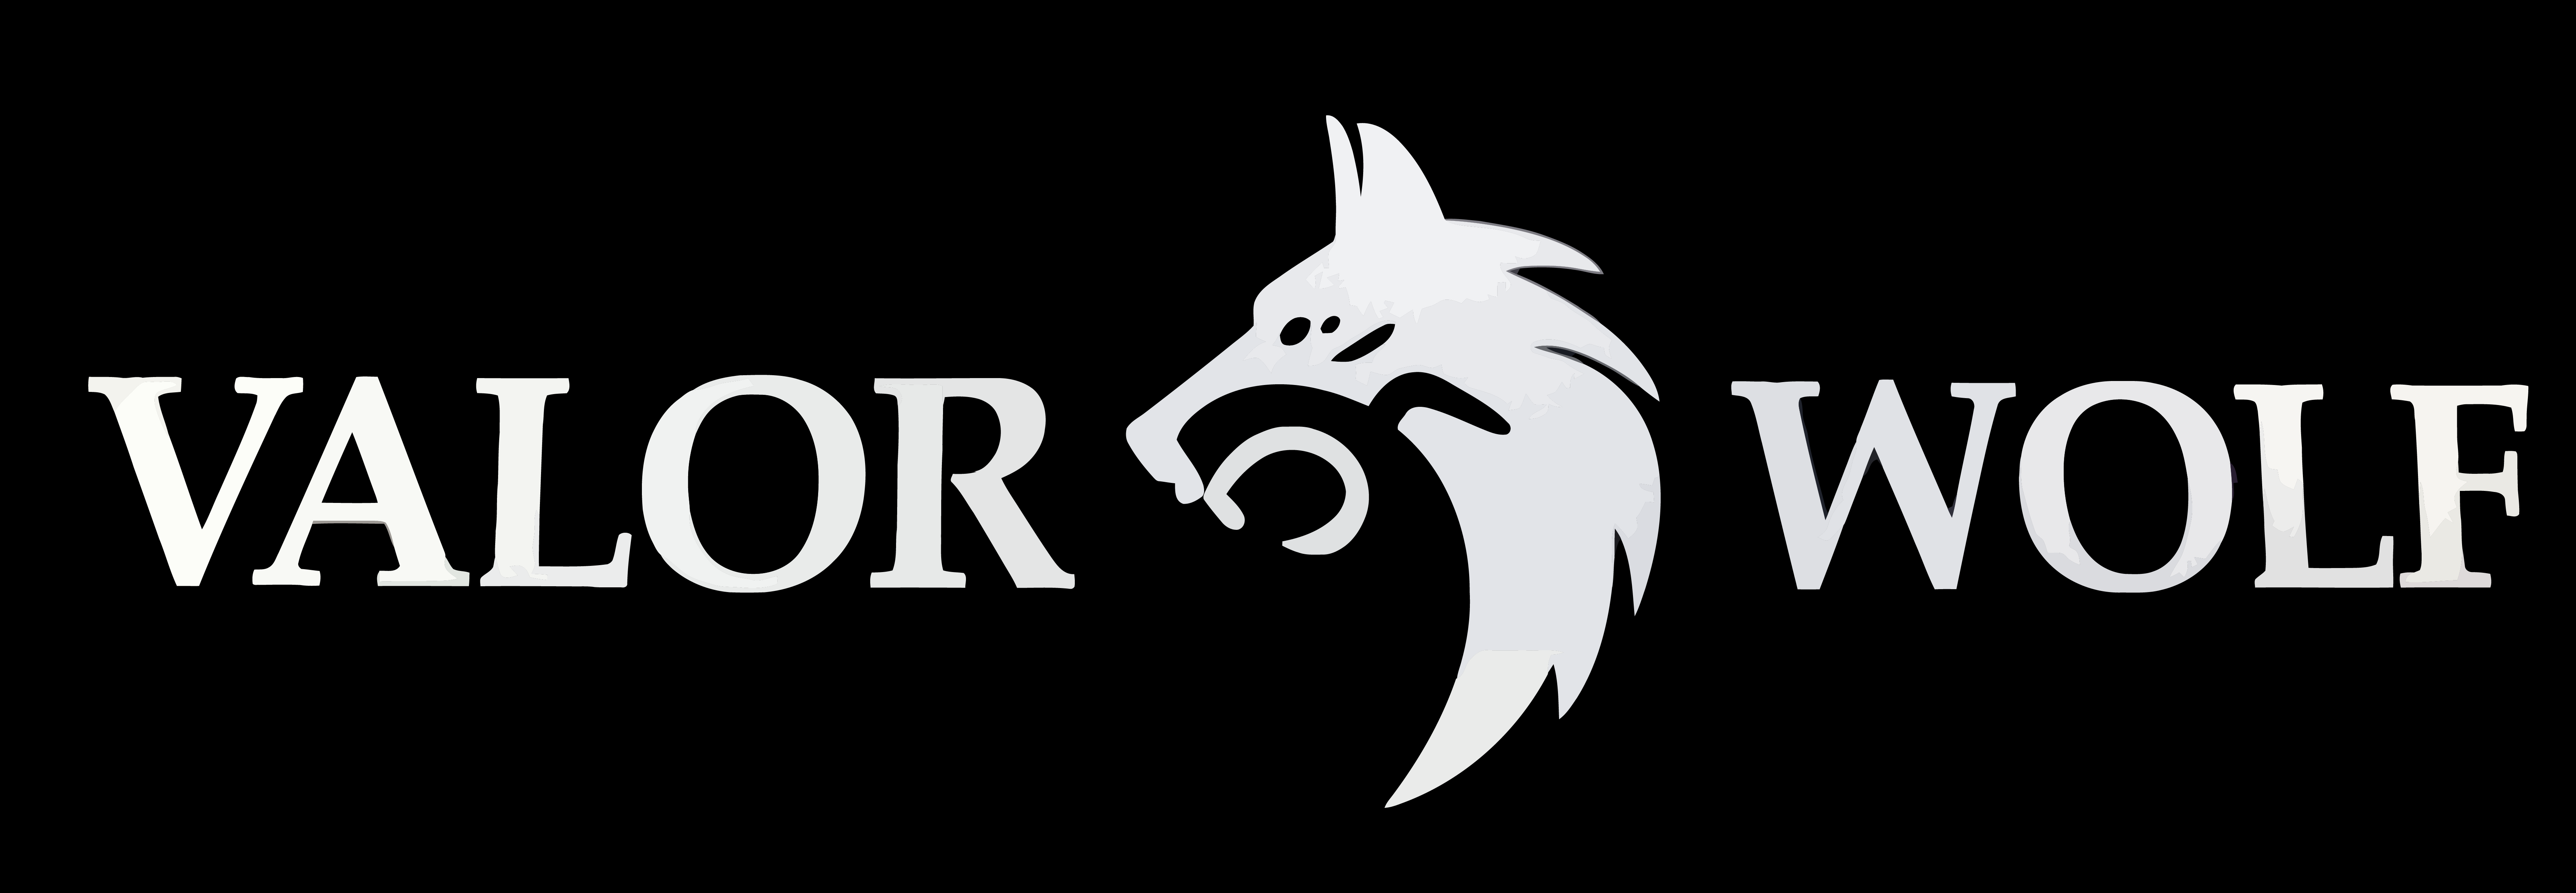 Valor Wolf